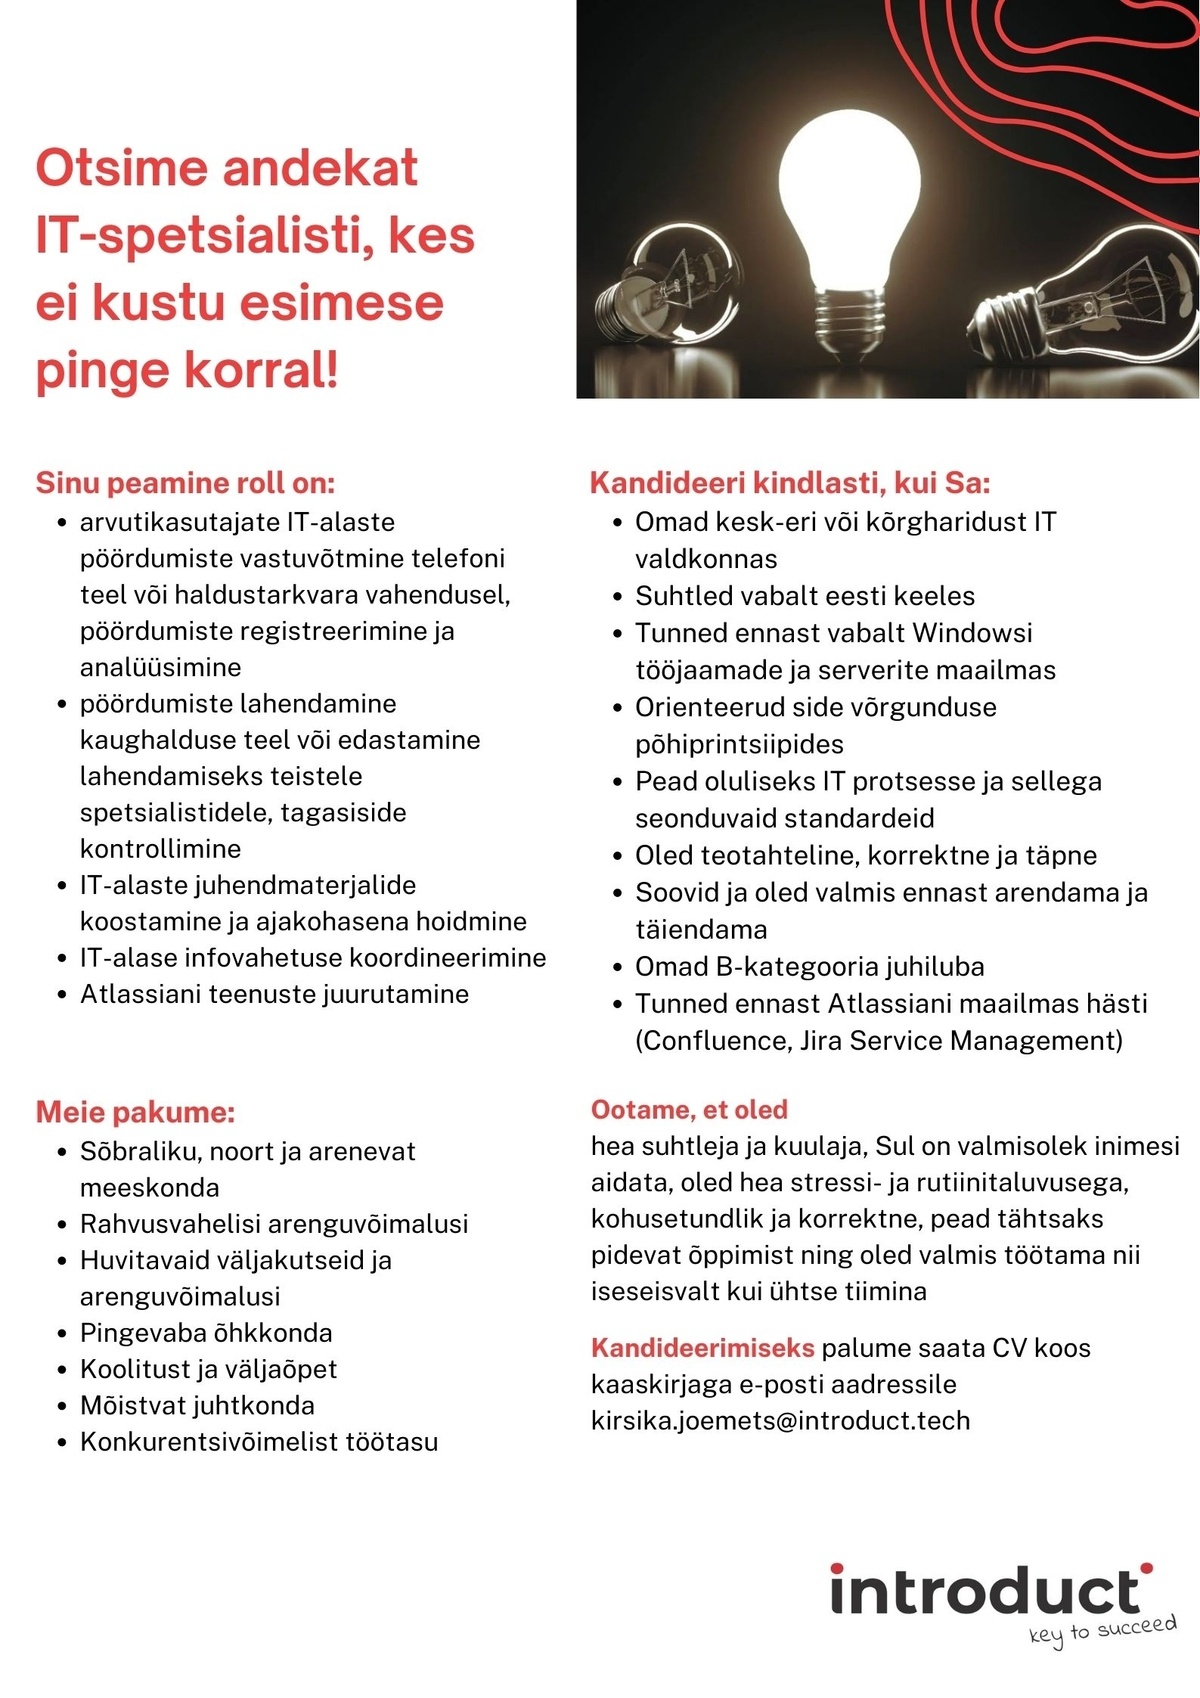 Introduct Estonia OÜ IT-spetsialist